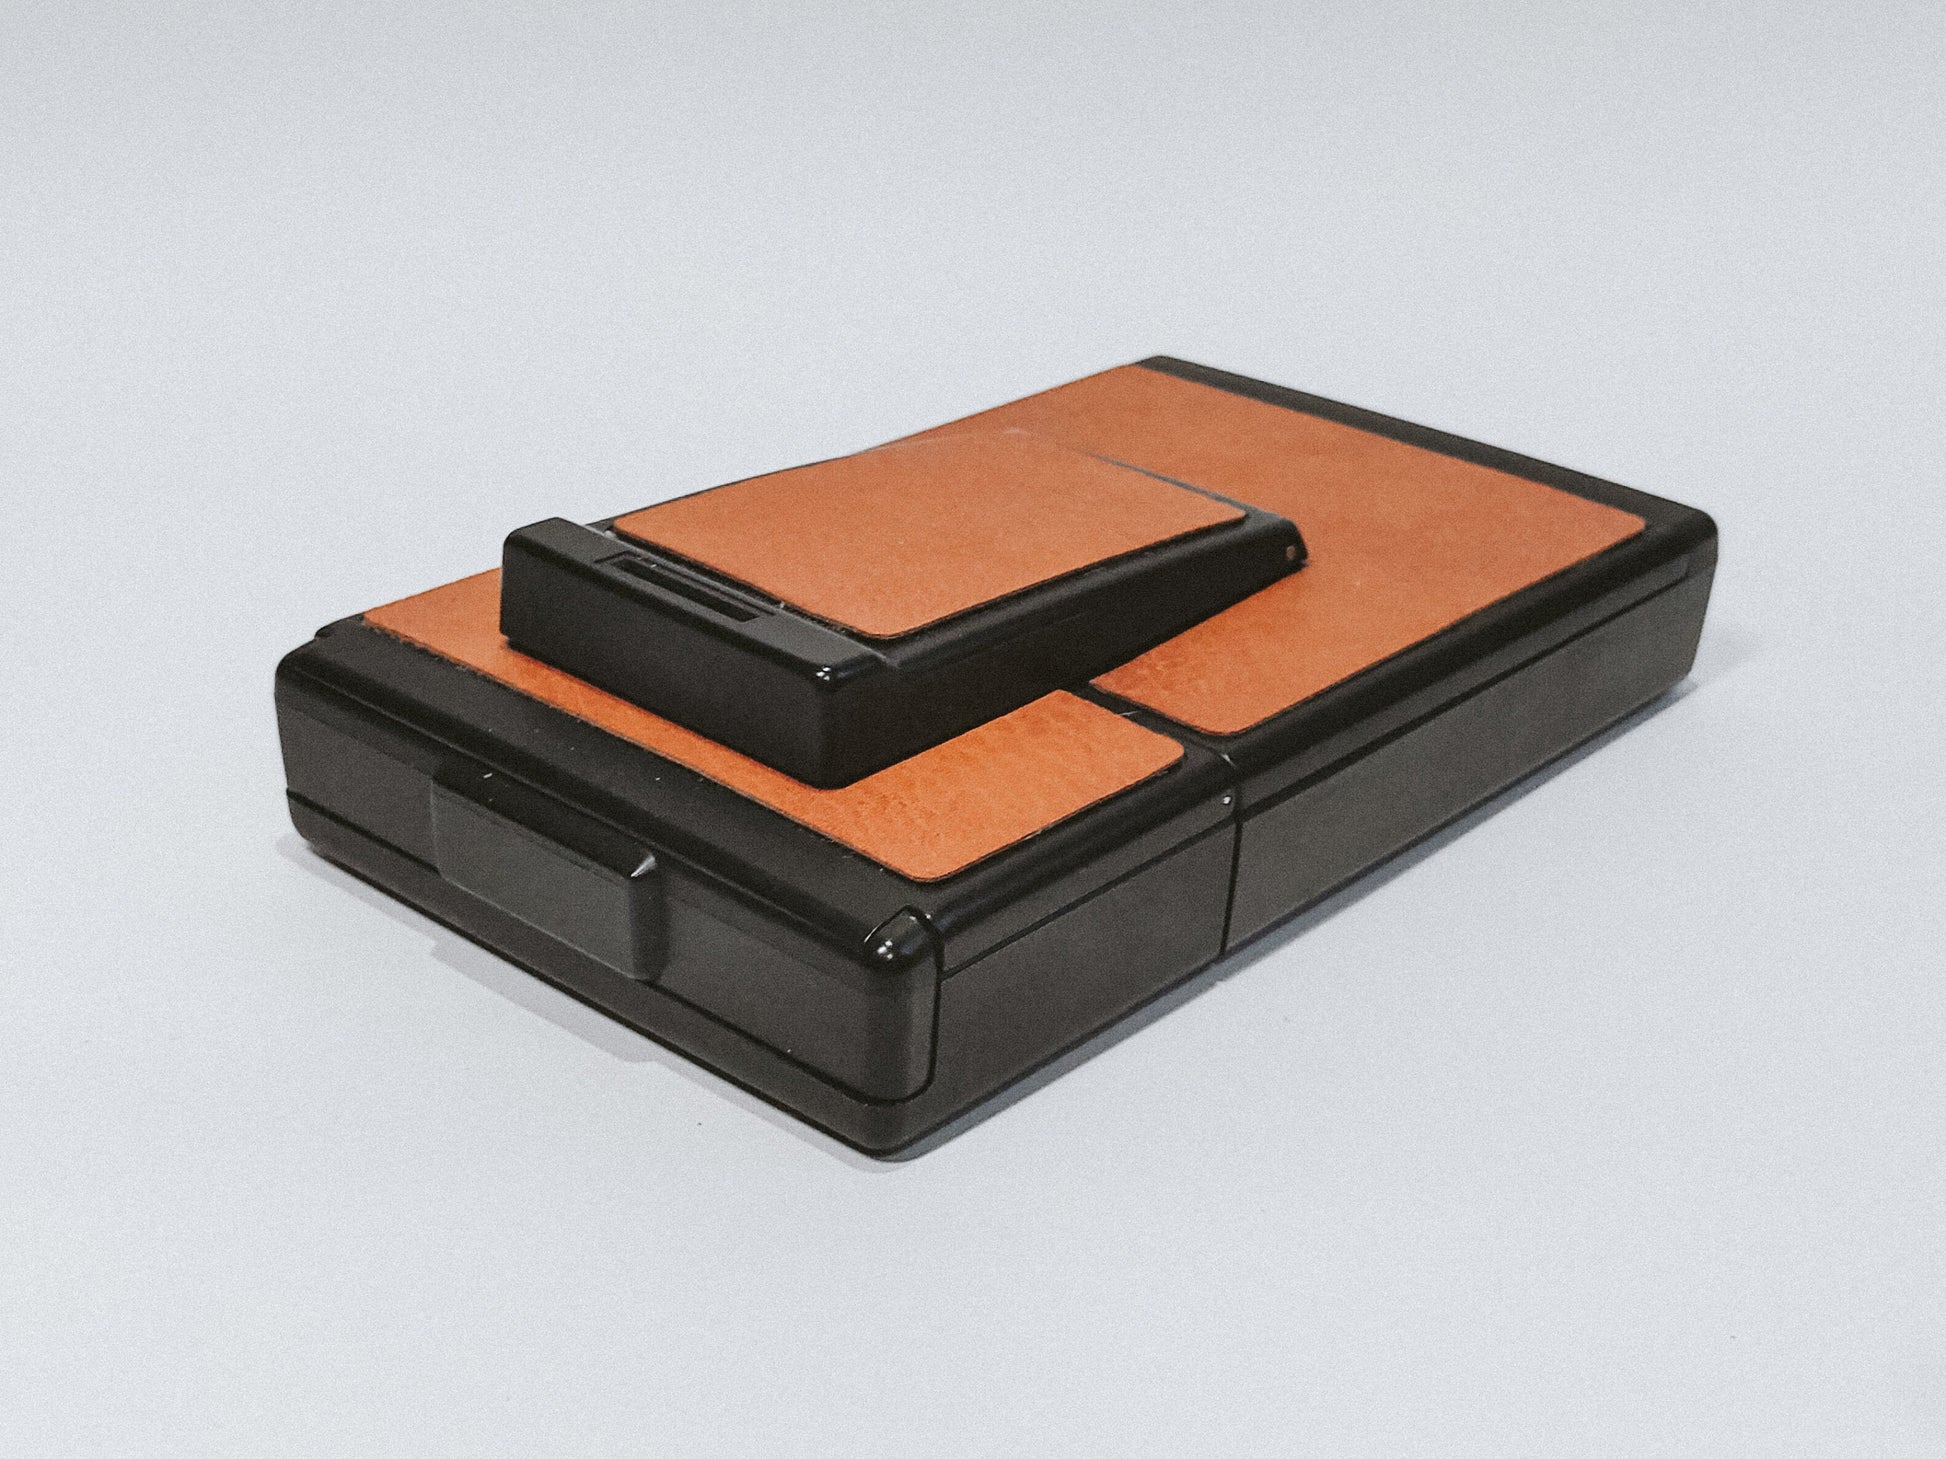 Vintage Polaroid SX-70 Instant Film Camera Model 3 fully Black body - Brown leather